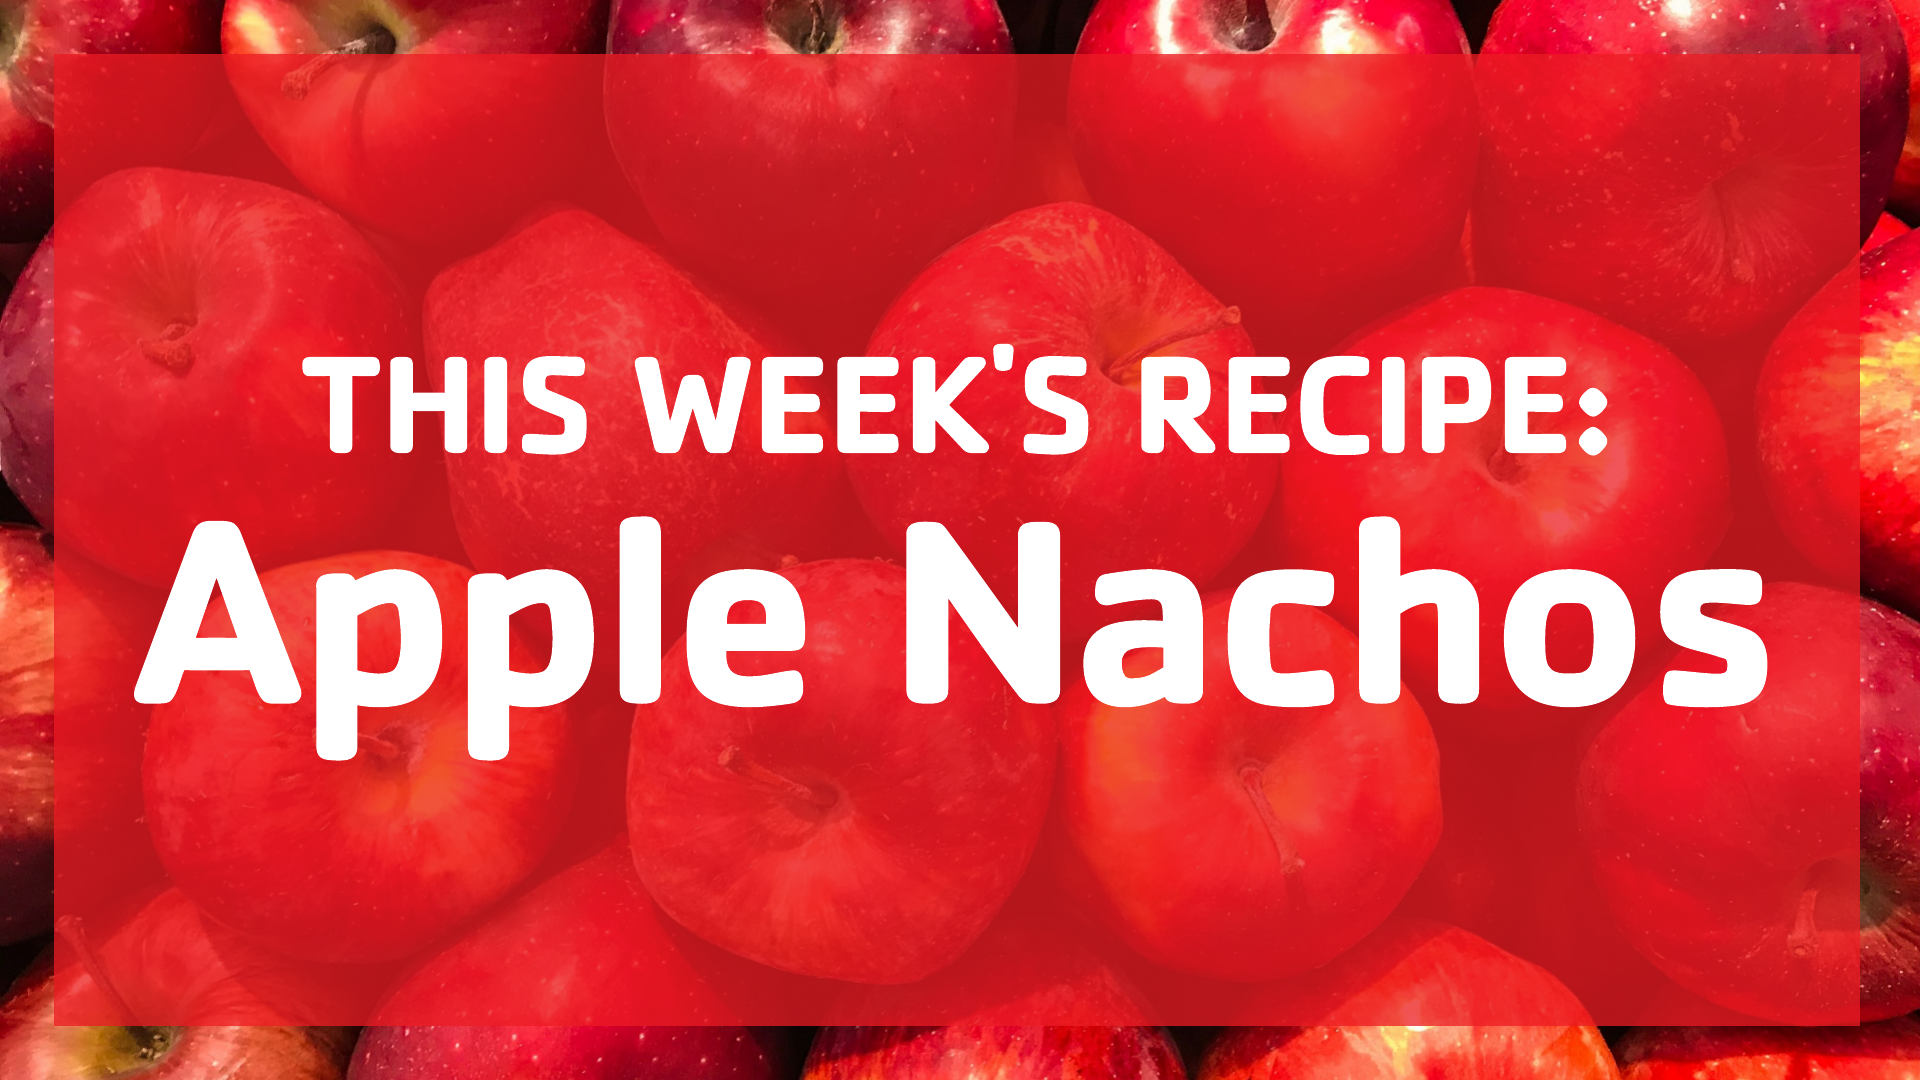 Recipe of the Week: Apple Nachos